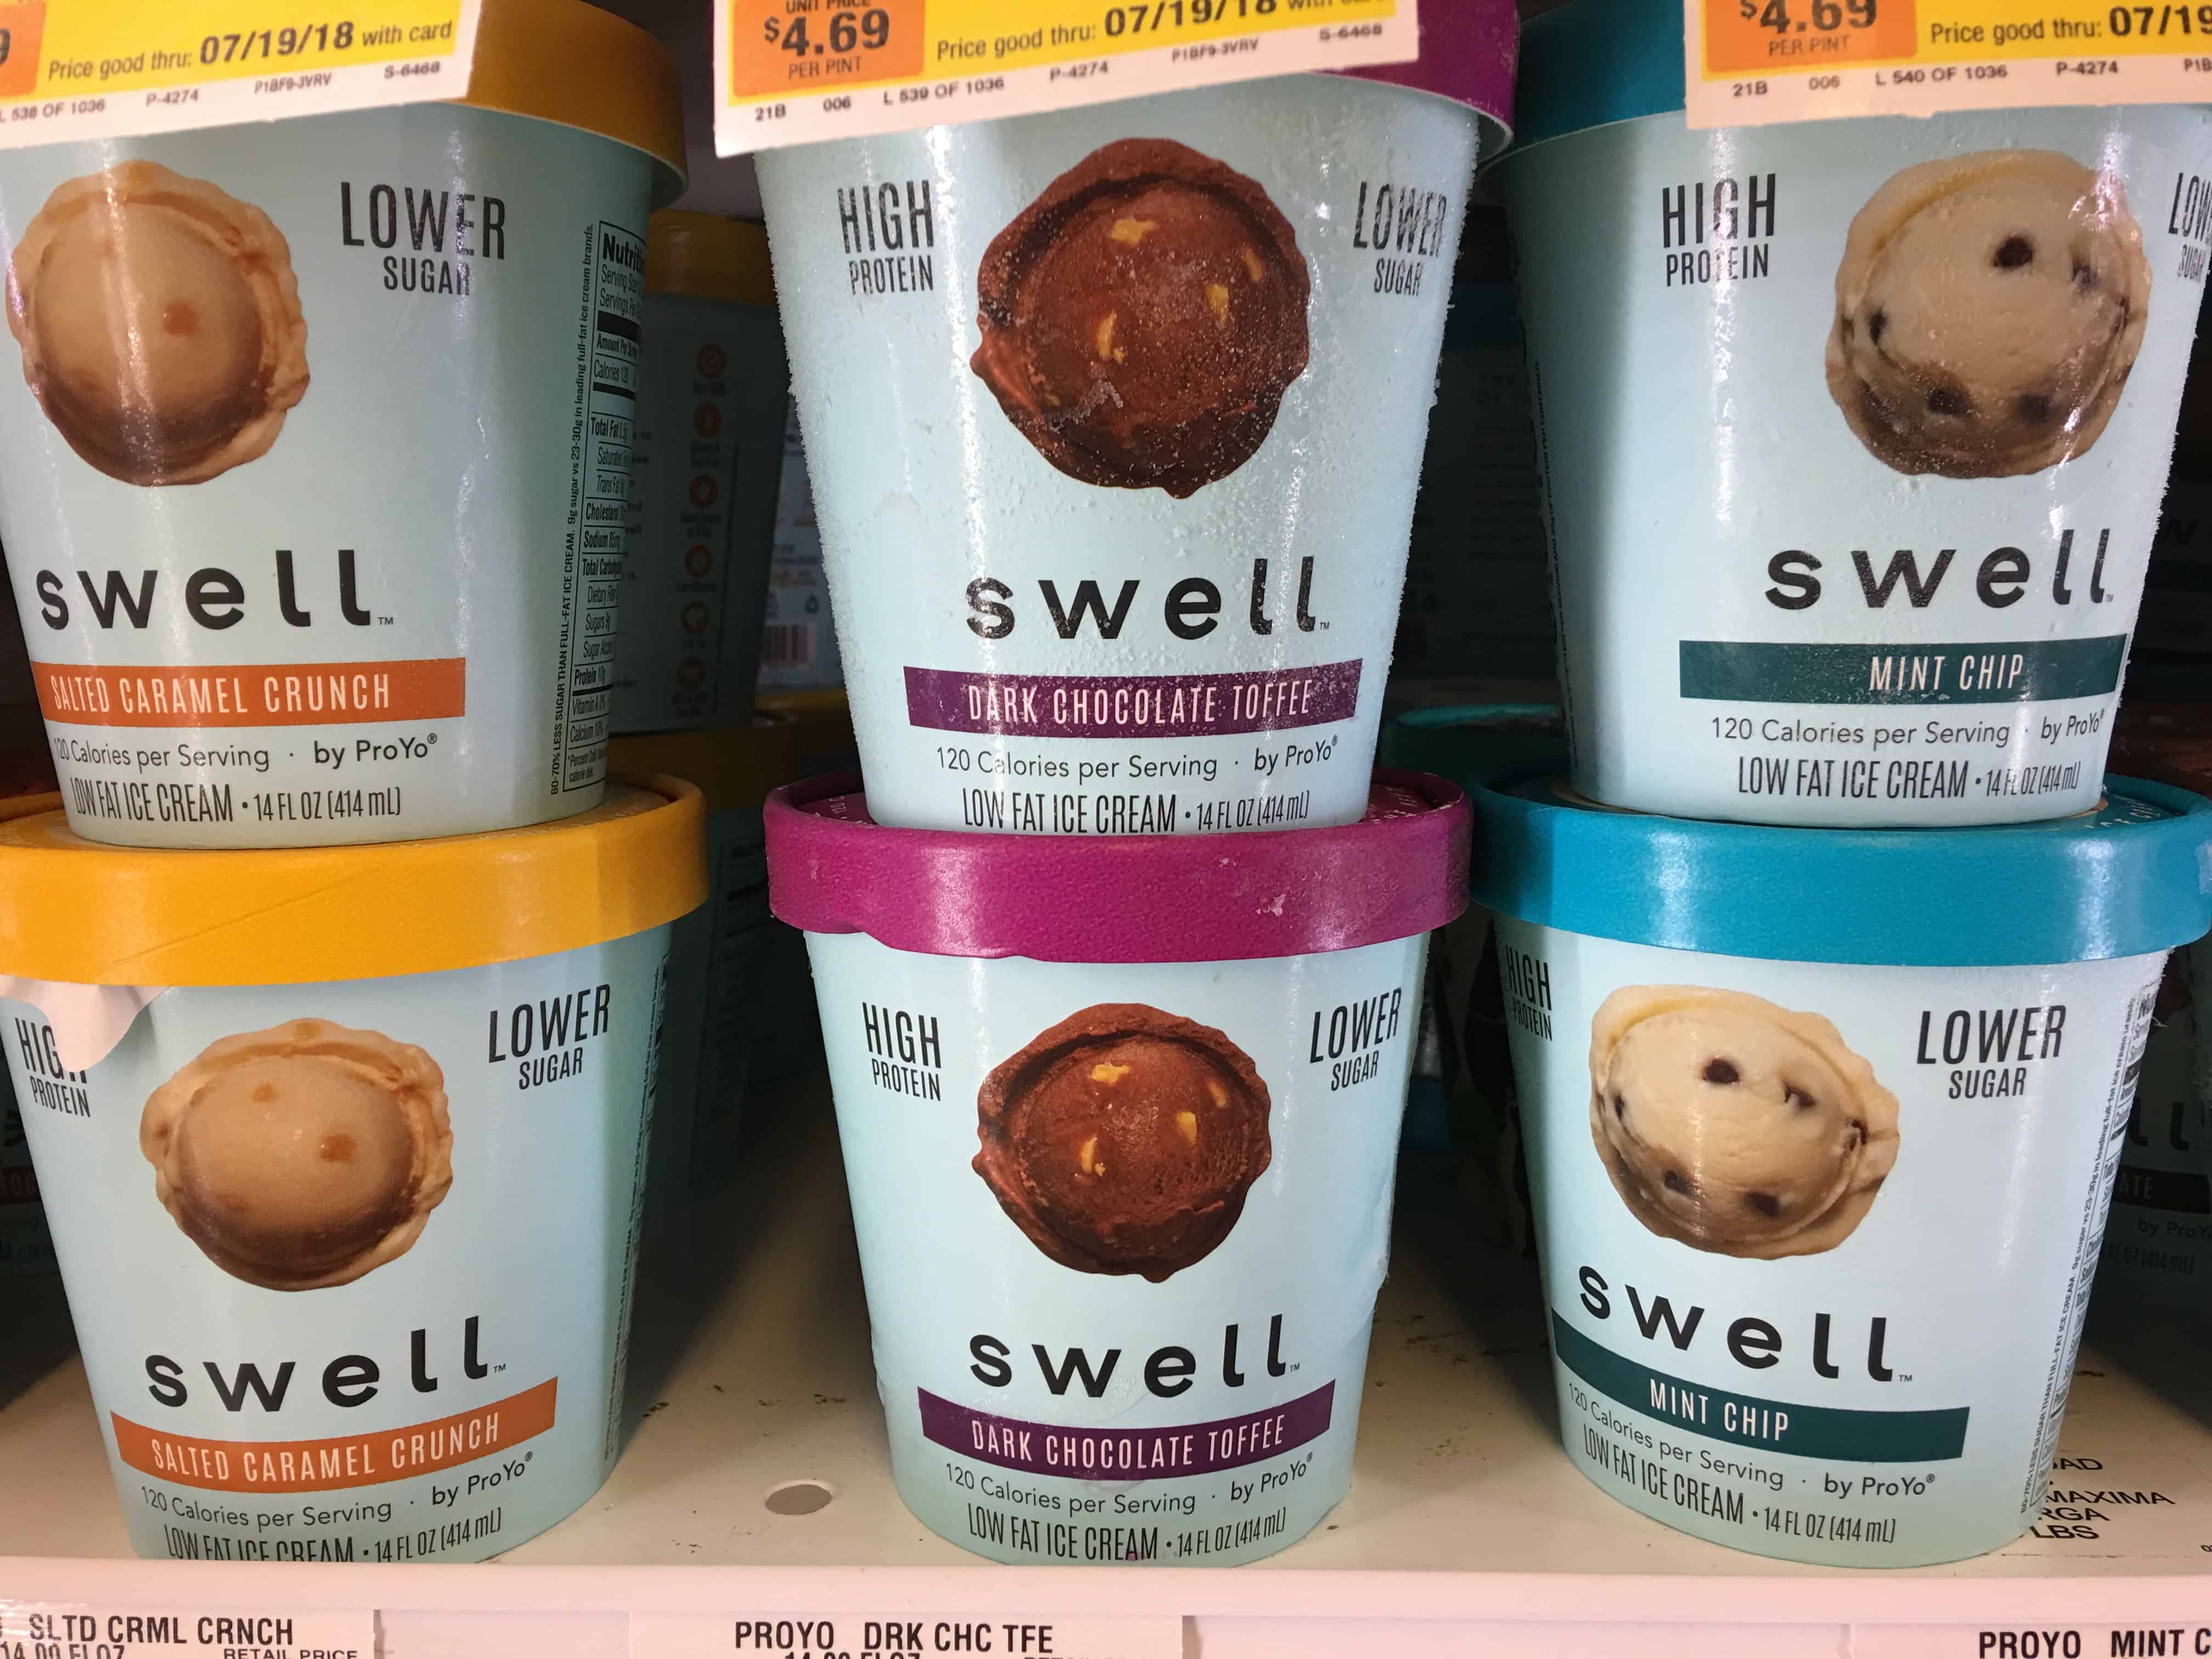 Giant: FREE Swell Ice Cream Thru 7/12!